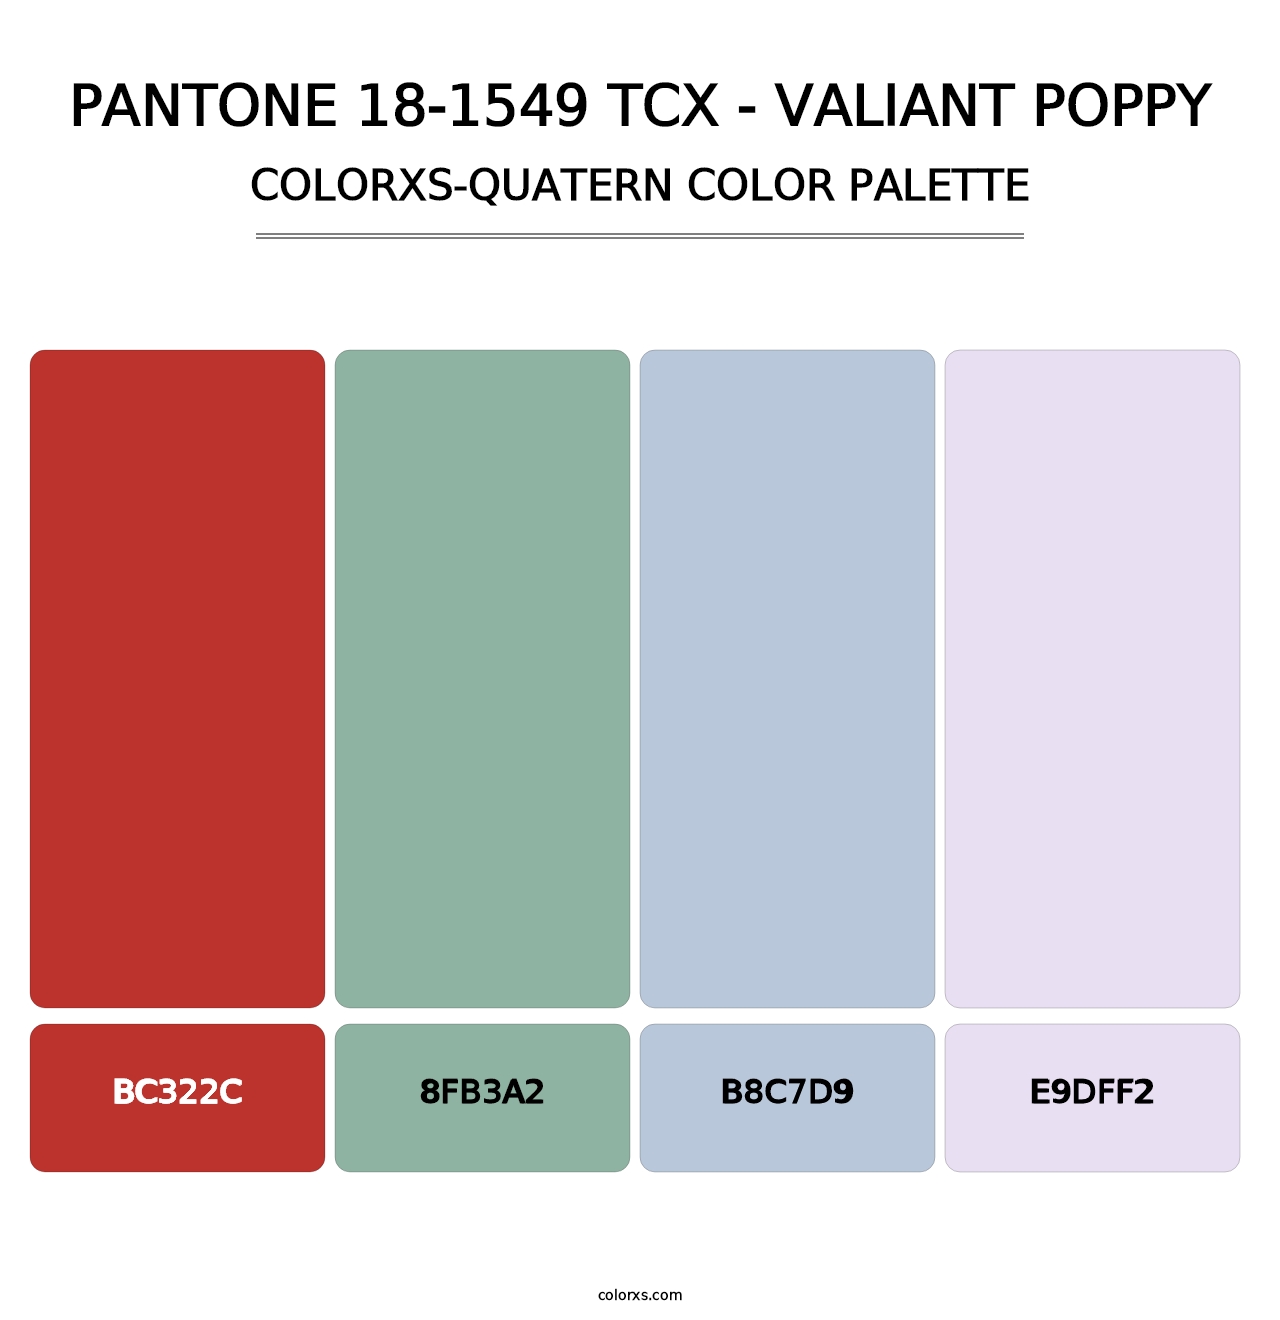 PANTONE 18-1549 TCX - Valiant Poppy - Colorxs Quatern Palette